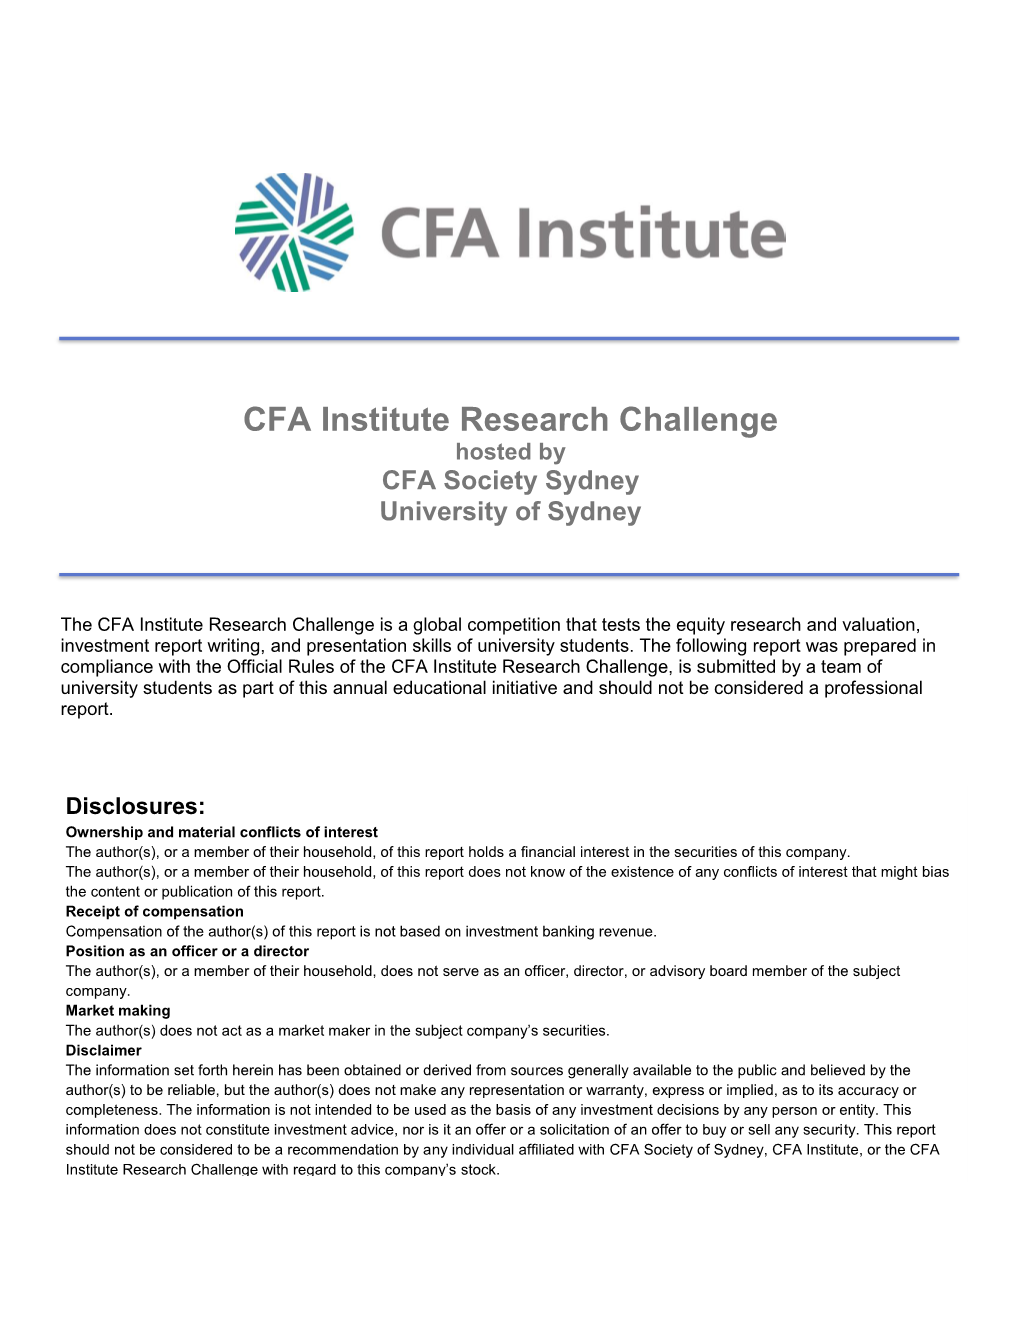 CFA Institute Research Challenge Hosted by CFA Society Sydney University of Sydney